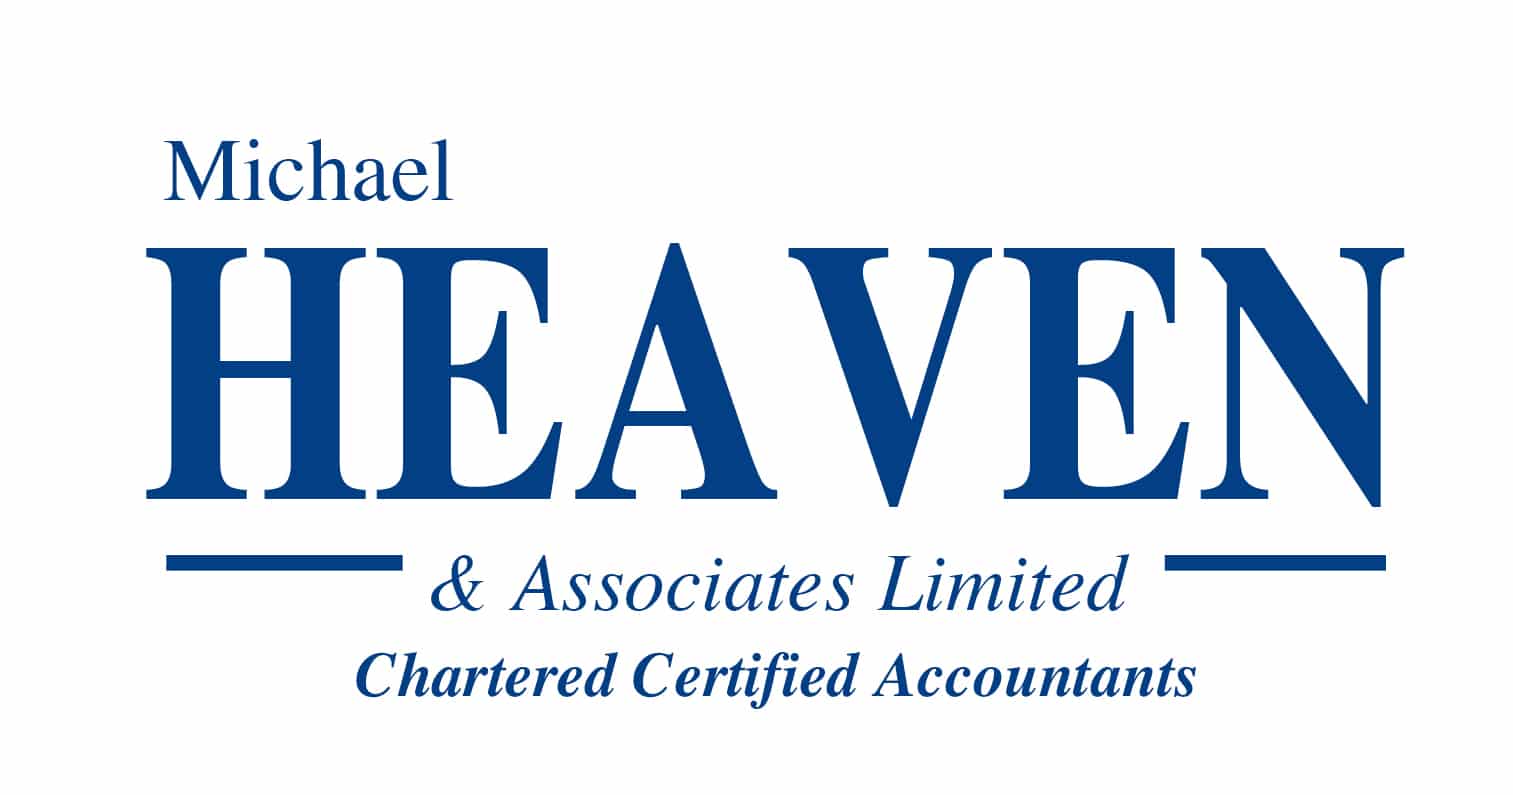 Michael Heaven & Associates Limited